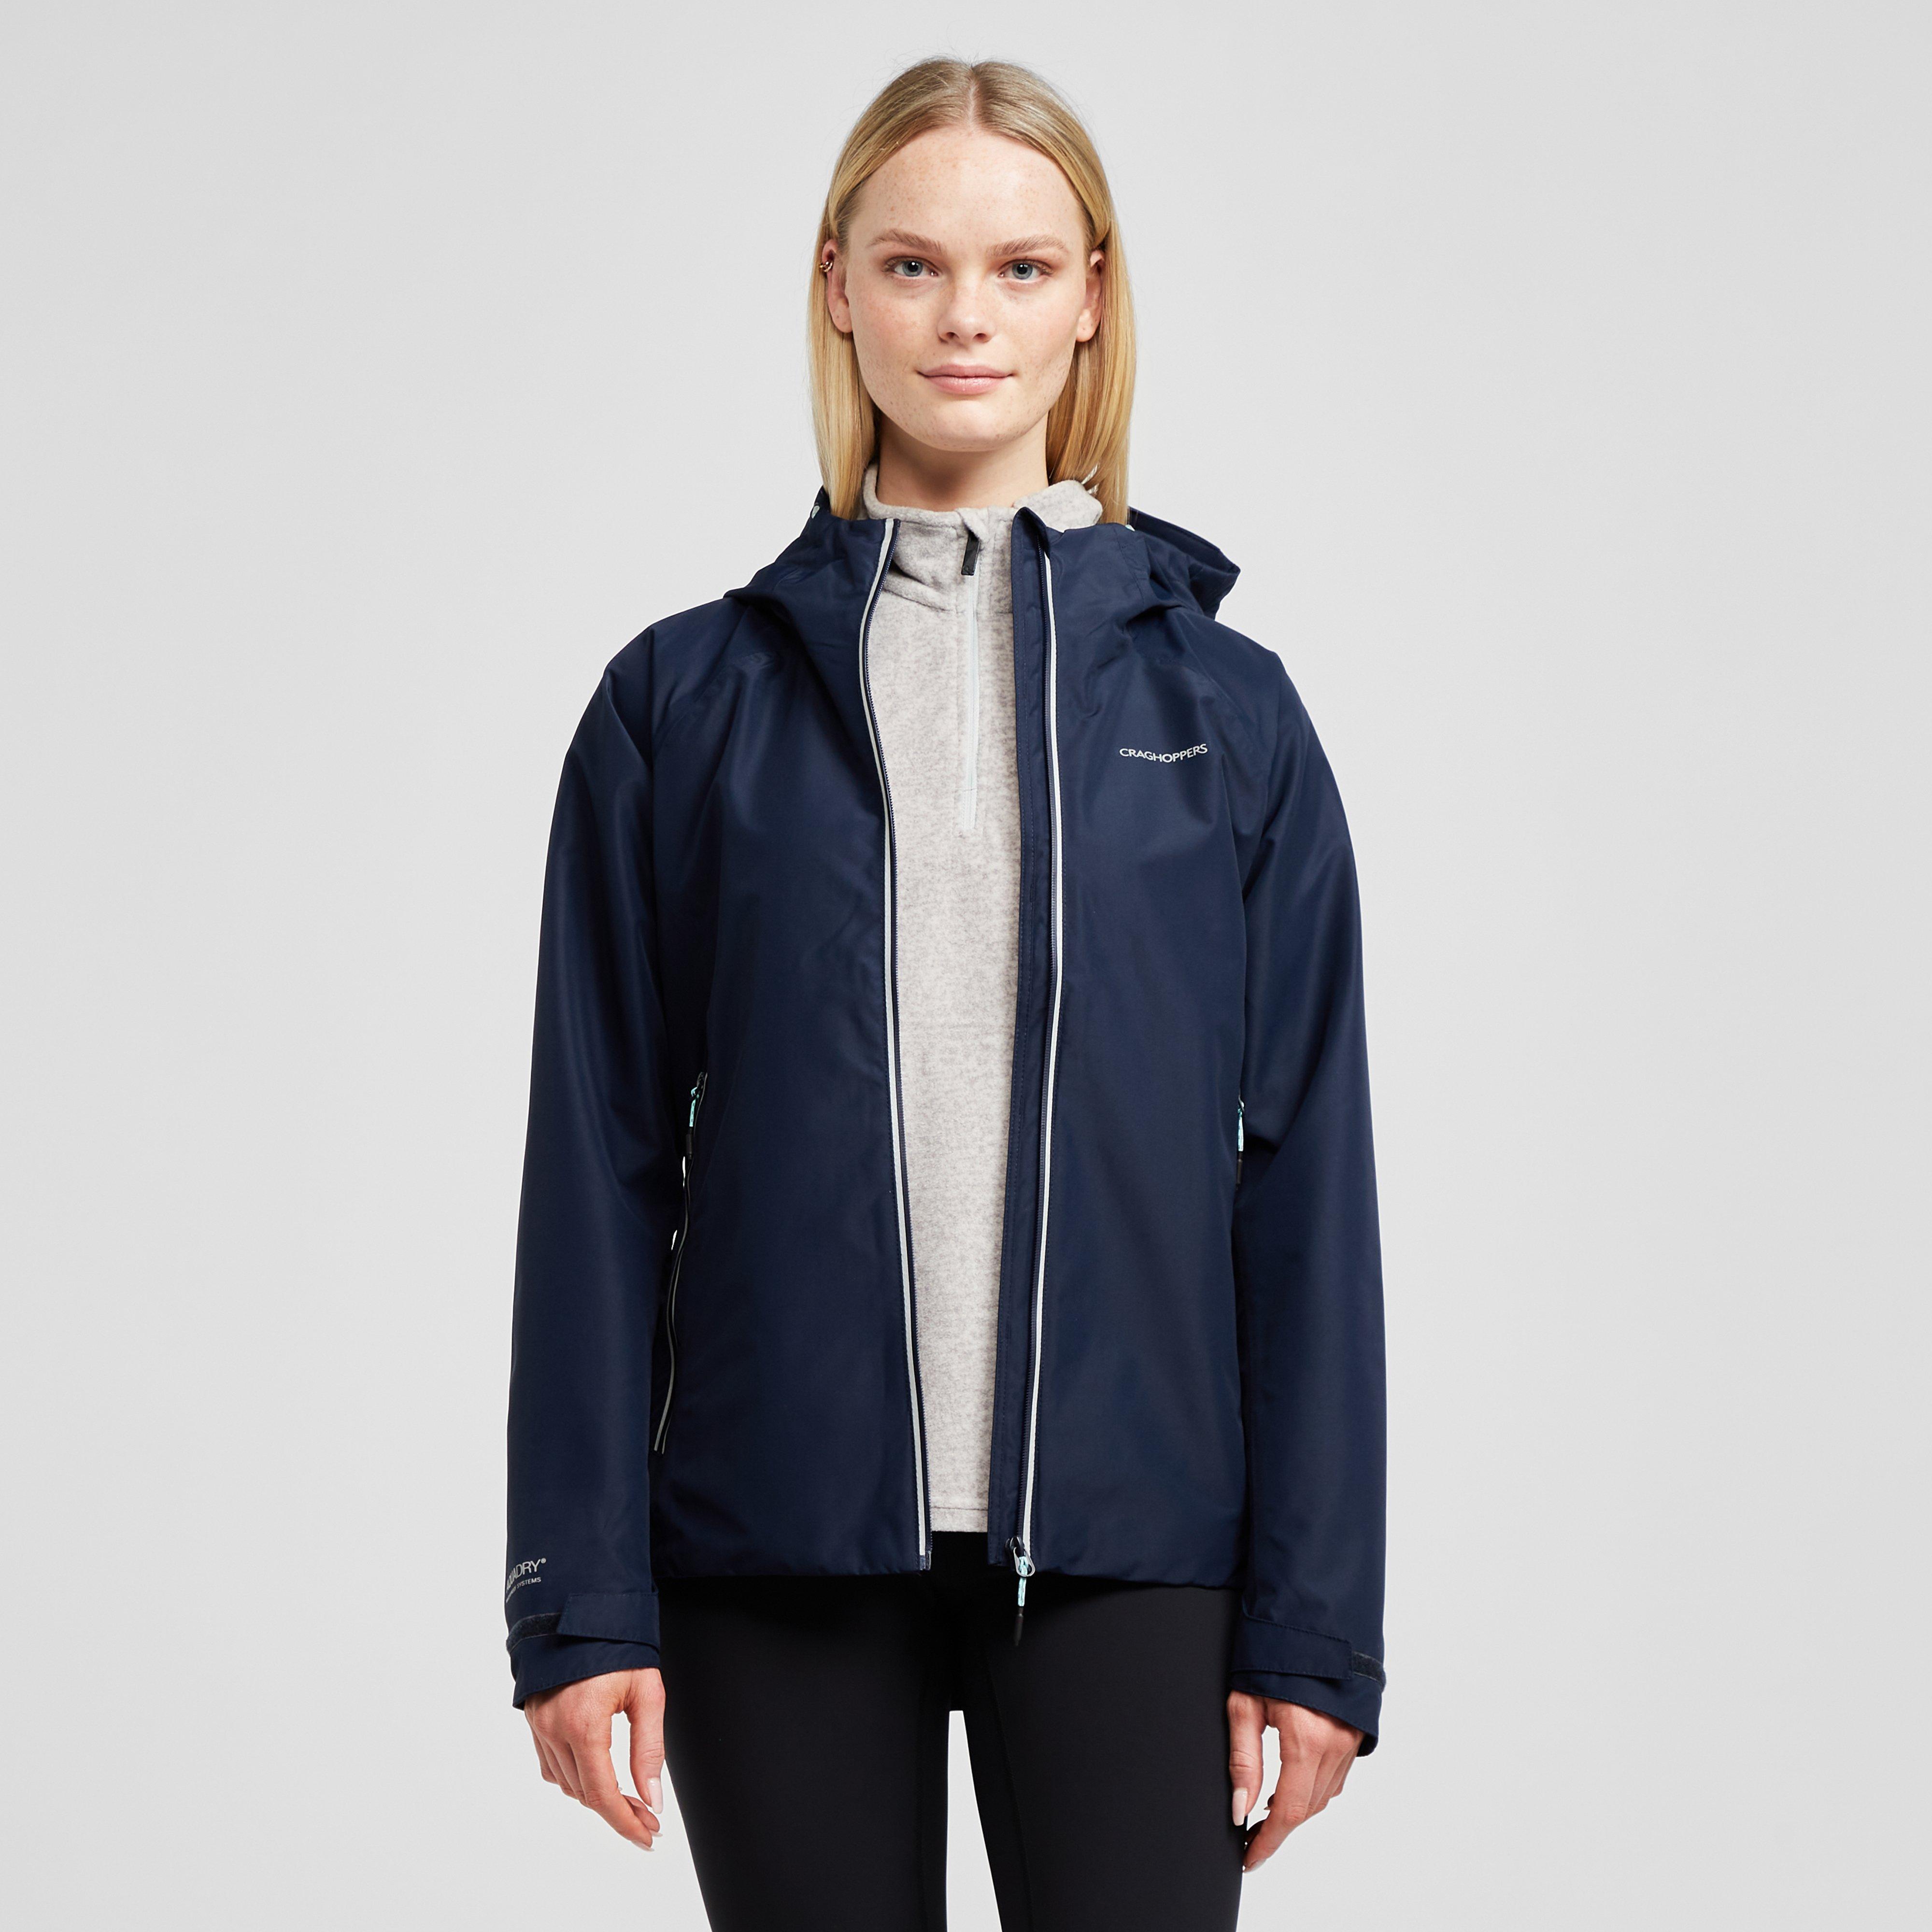 craghoppers women's waterproof atlas jacket, navy